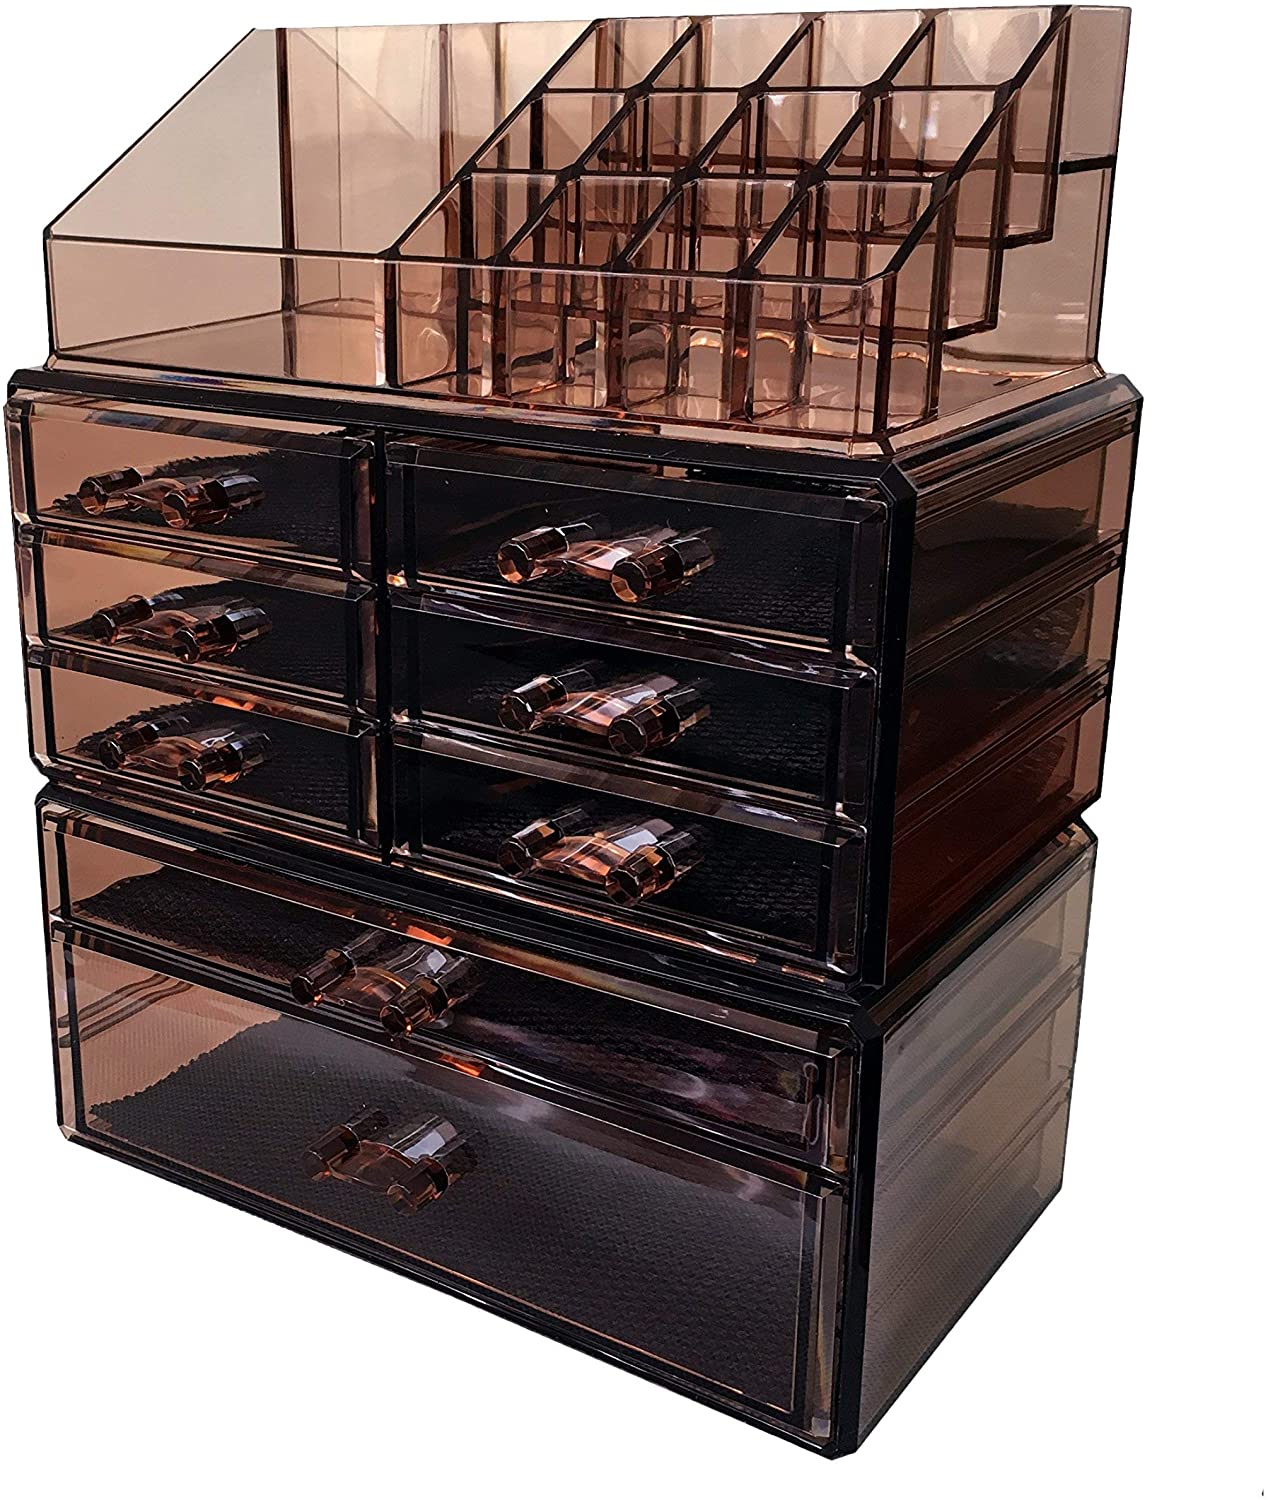 Sodynee Acrylic Makeup Cosmetic Organizer Storage Drawers Display Boxes Case, Three Pieces Set, Brown